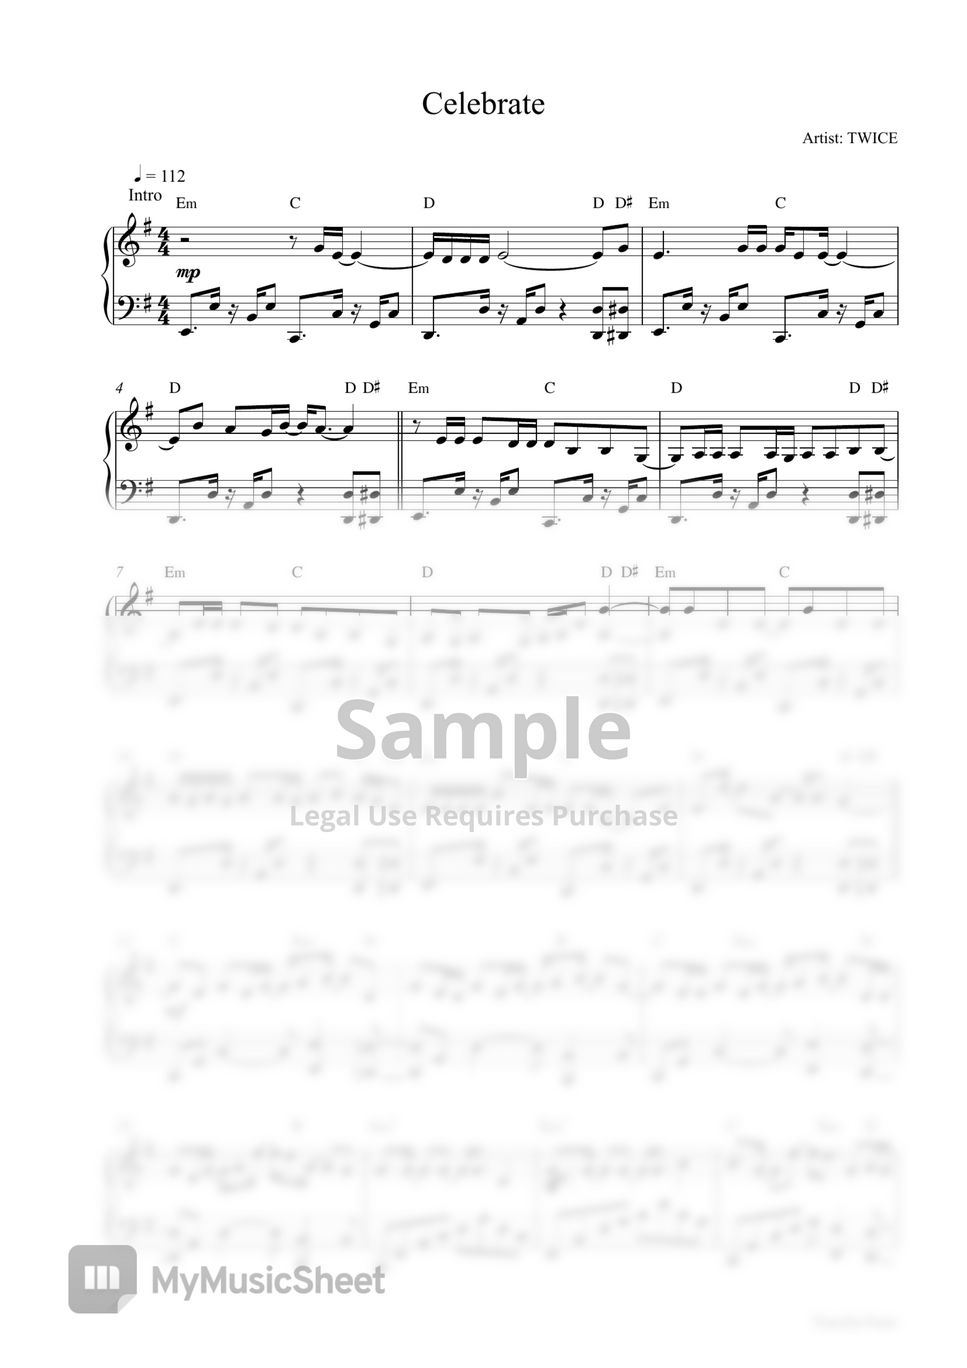 TWICE - Celebrate (Piano Sheet) by Pianella Piano